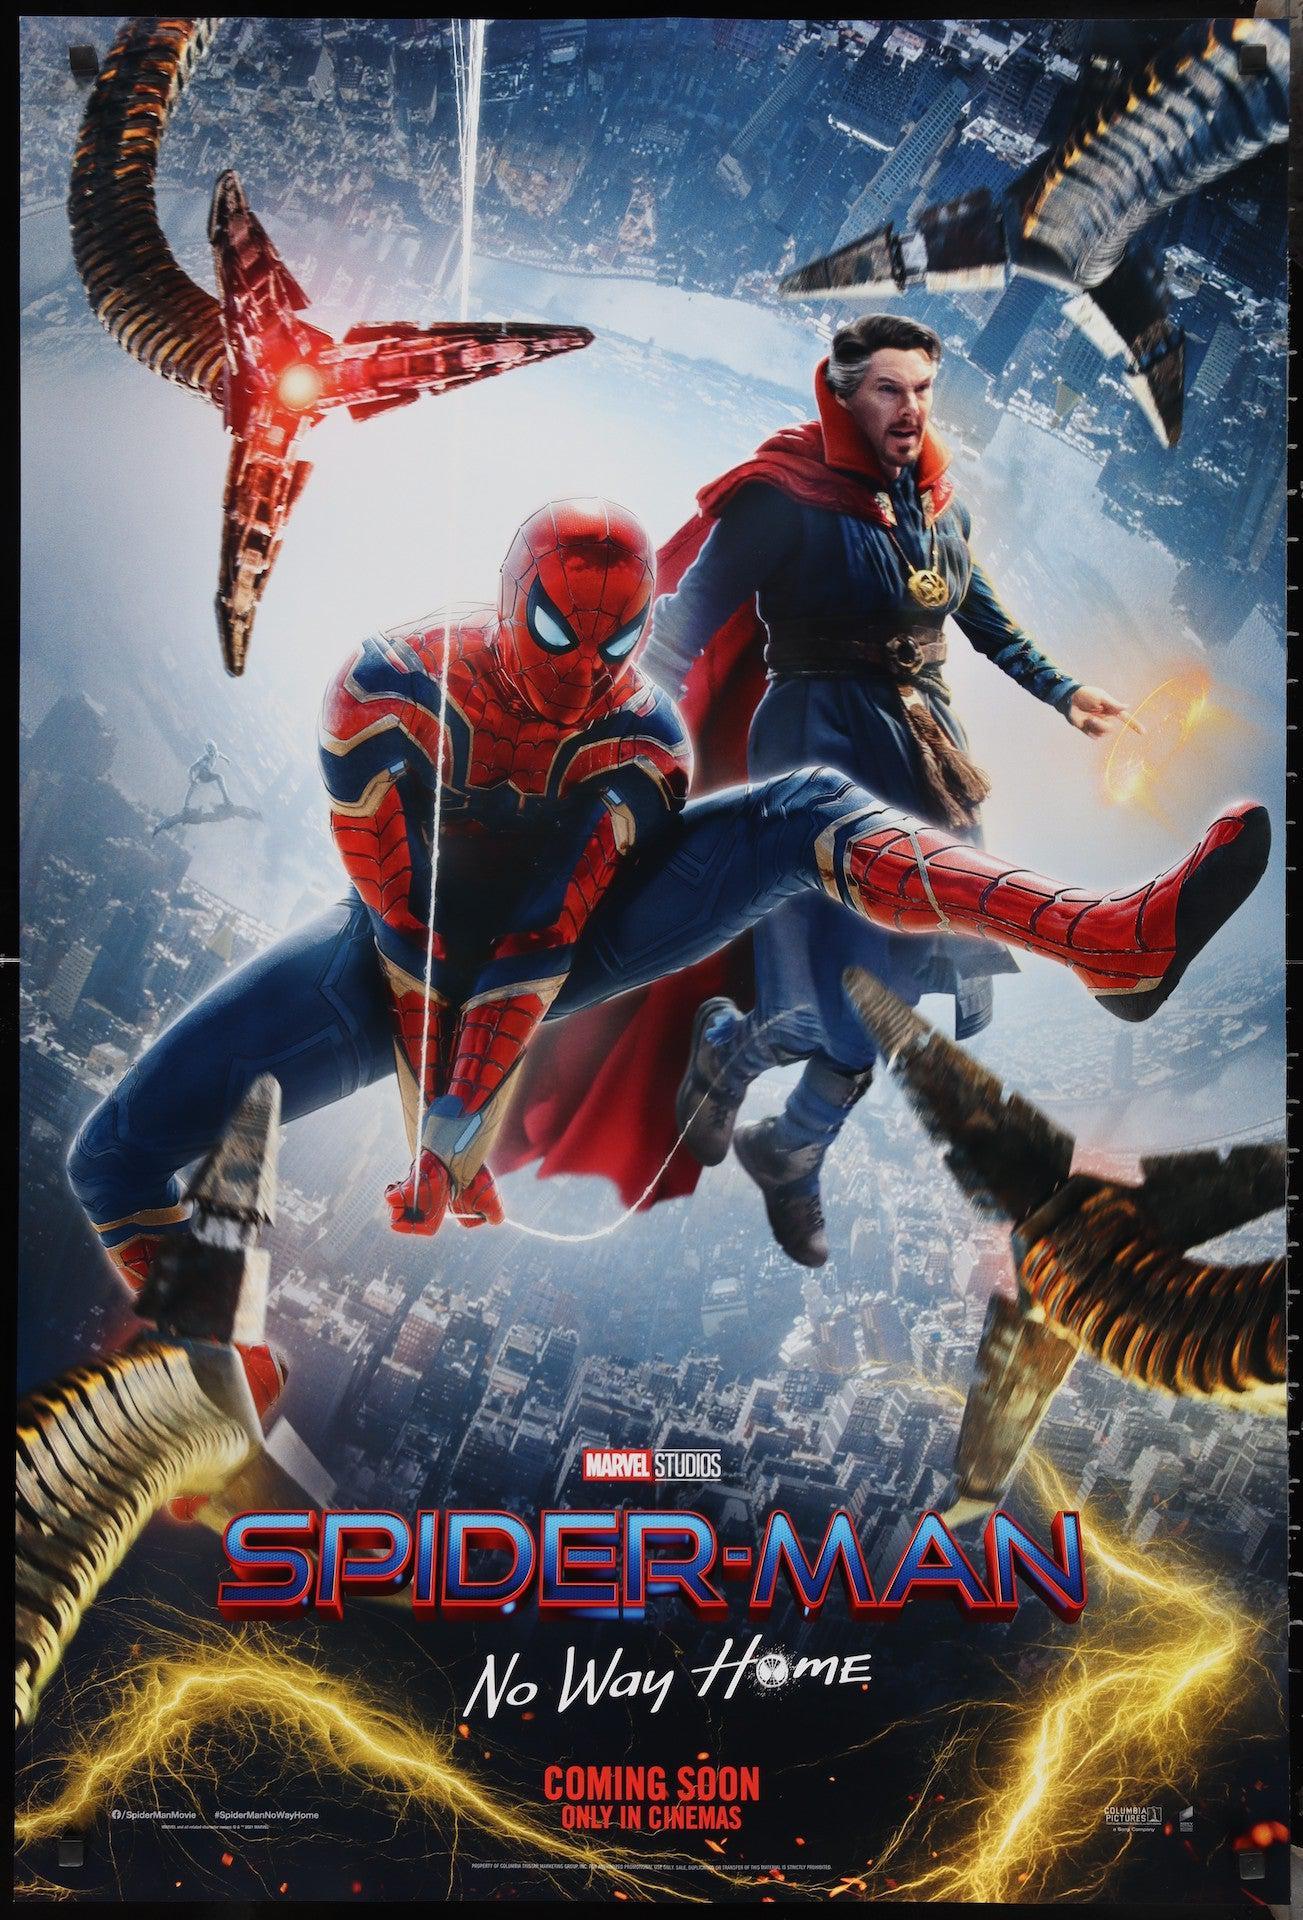 Spider-Man: No Way Home Movie Poster 2021 1 Sheet (27x41)